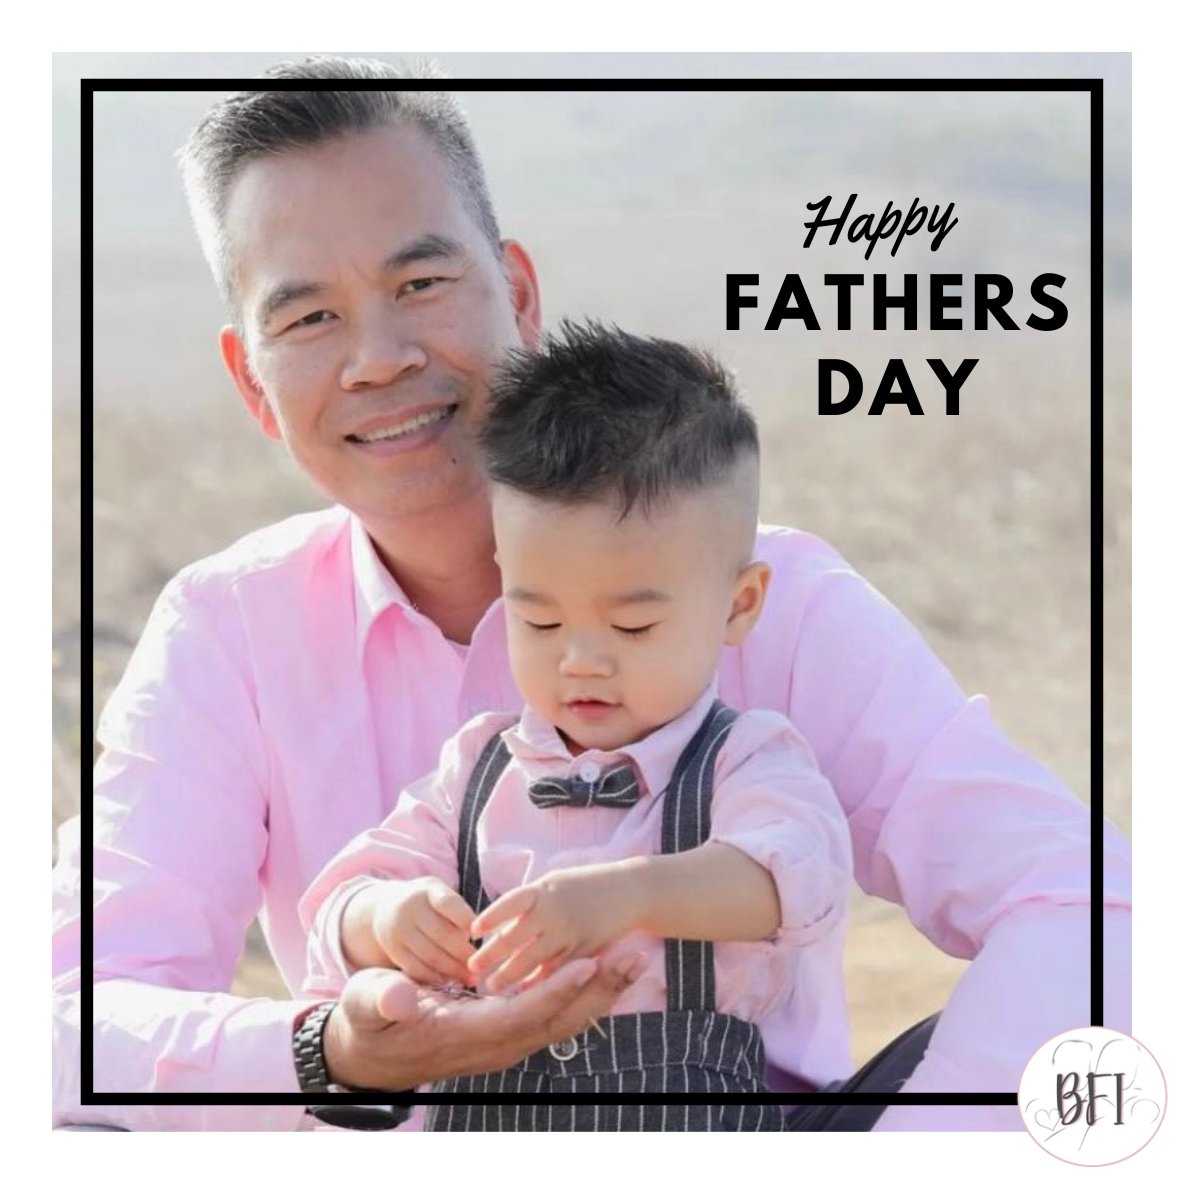 Happy Father's Day!!💙

#fathersday #amazingdad #dadtobe #dad #father #buildingfamiliesinc #surrogacystory #journeytoparenthood #fathersday2023